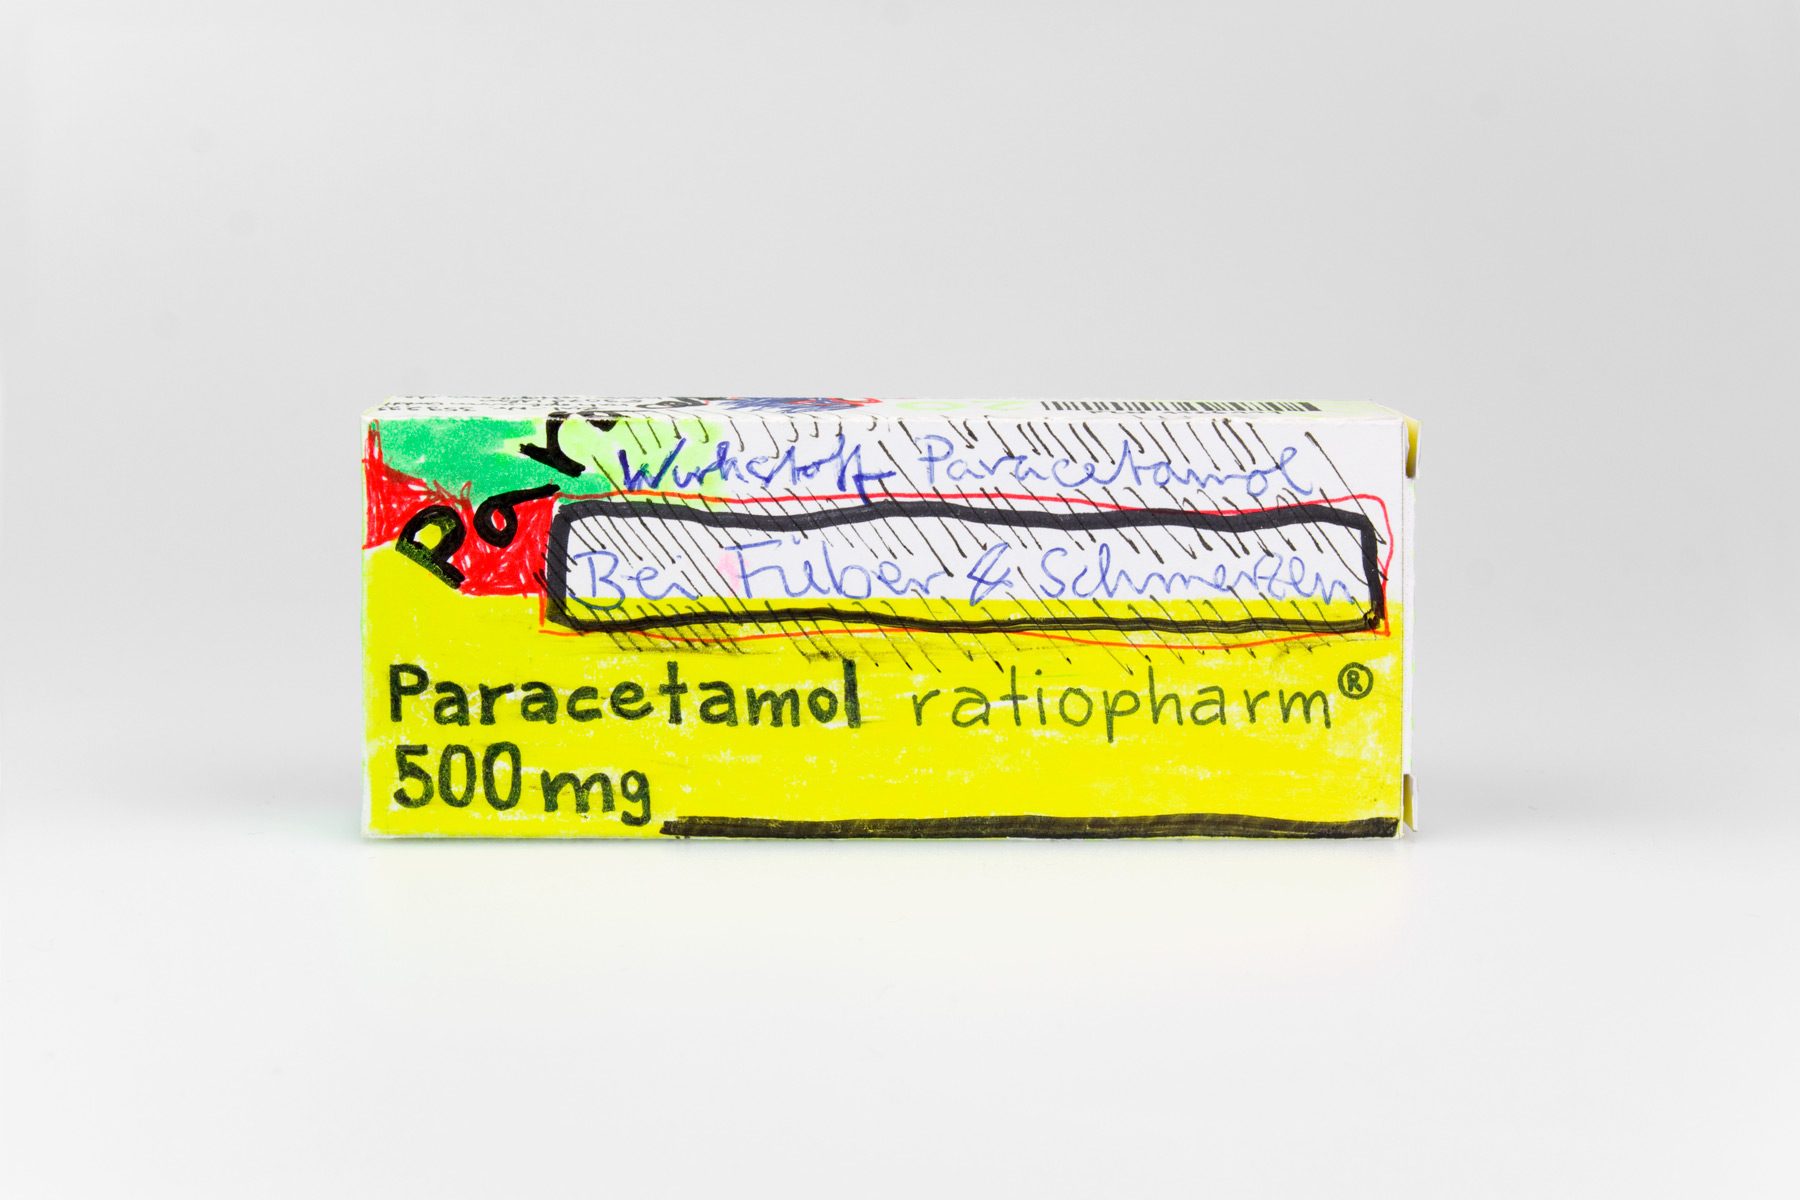 Paracetamol-ratiopharm® 500 mg, Verpackungsdesign, David Fischbach